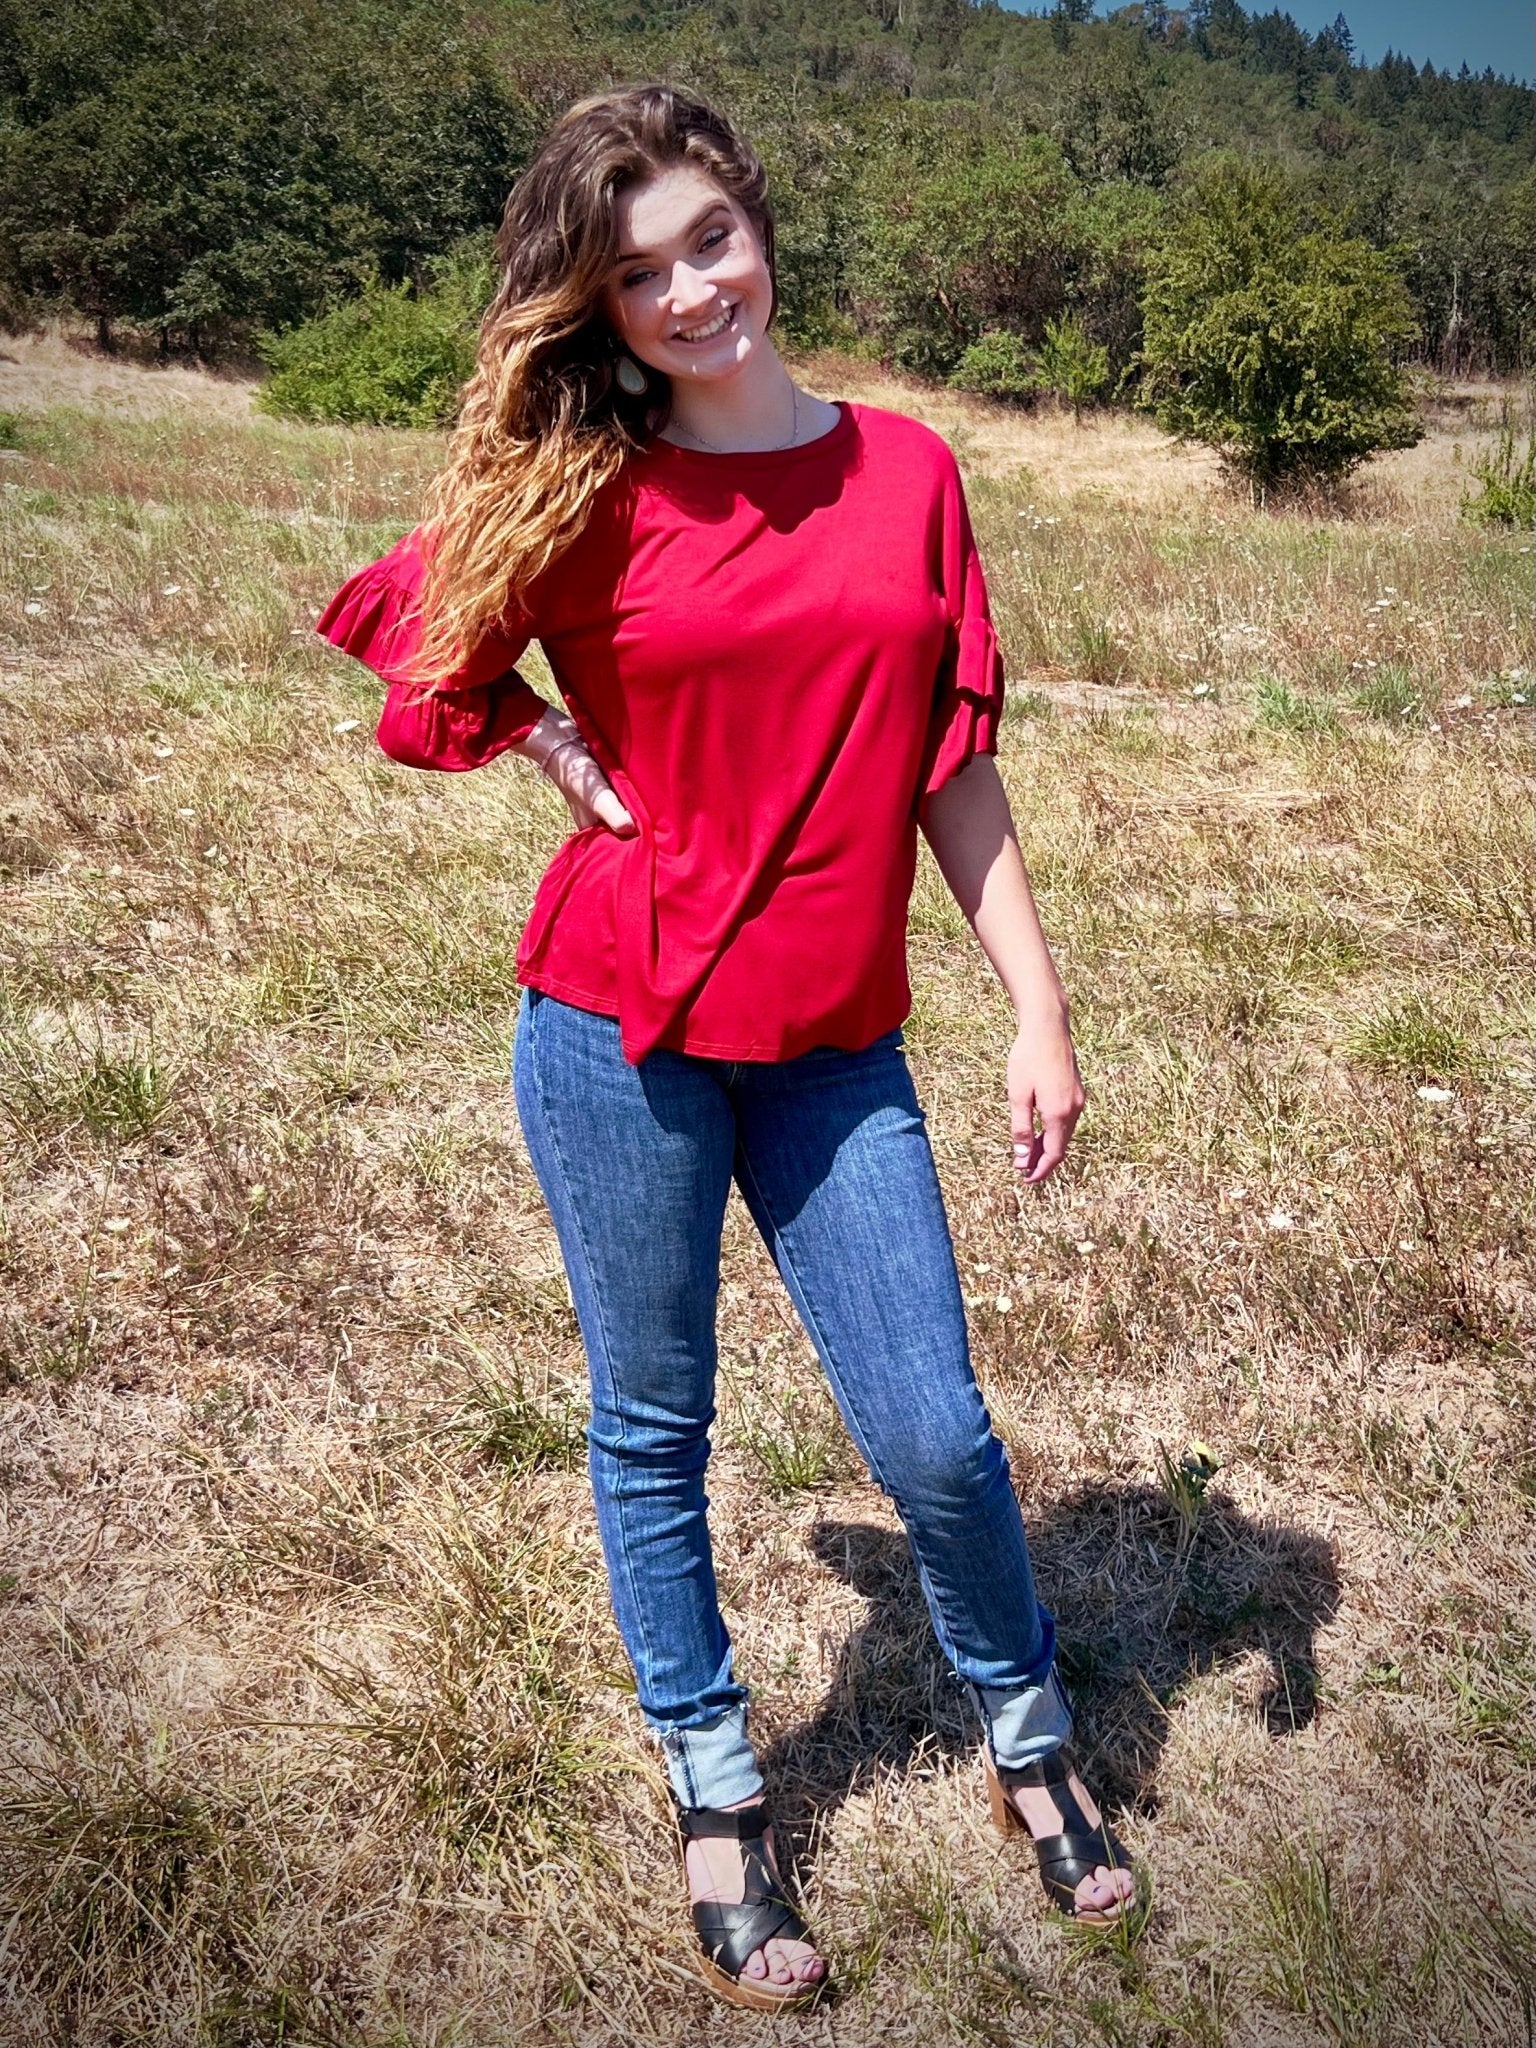 Mia Crossover Skinny Jean | Risen Jeans| RDP5131 - Lavender Hills BeautyRisen